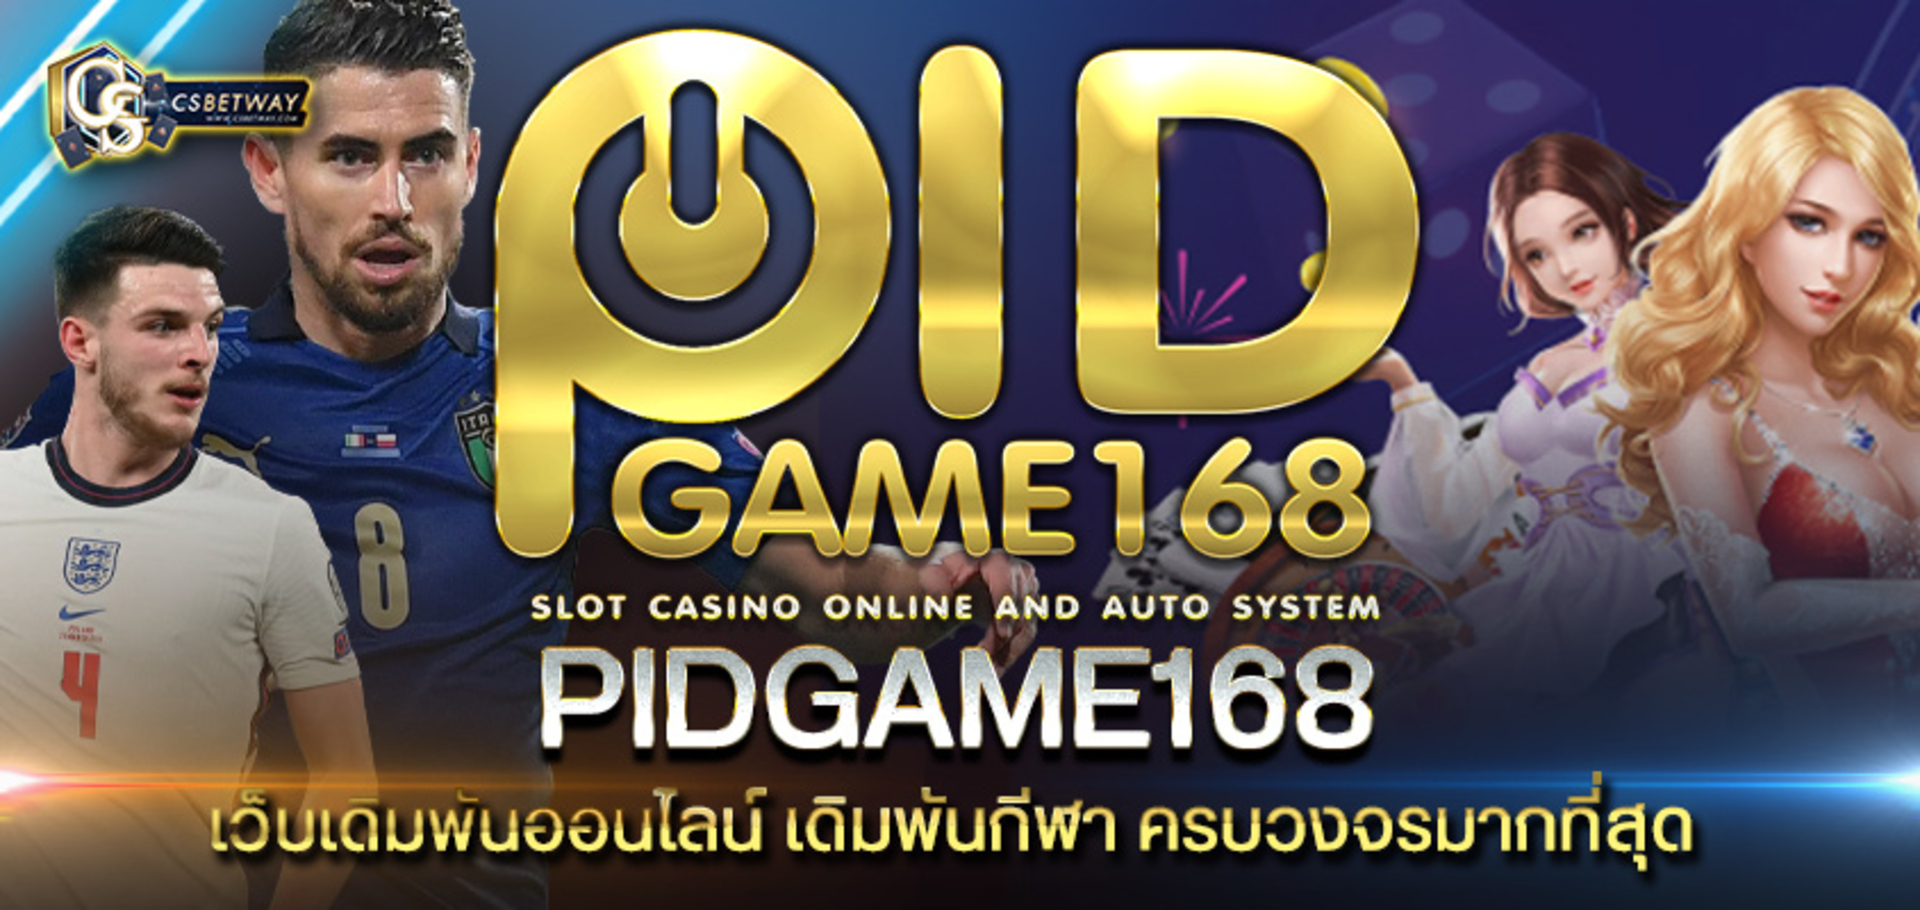 PidGame168 เว็บเดิมพันออนไลน์ เดิมพันกีฬา ครบวงจรมากที่สุด เล่นได้ จ่ายจริง รับเงินทันที